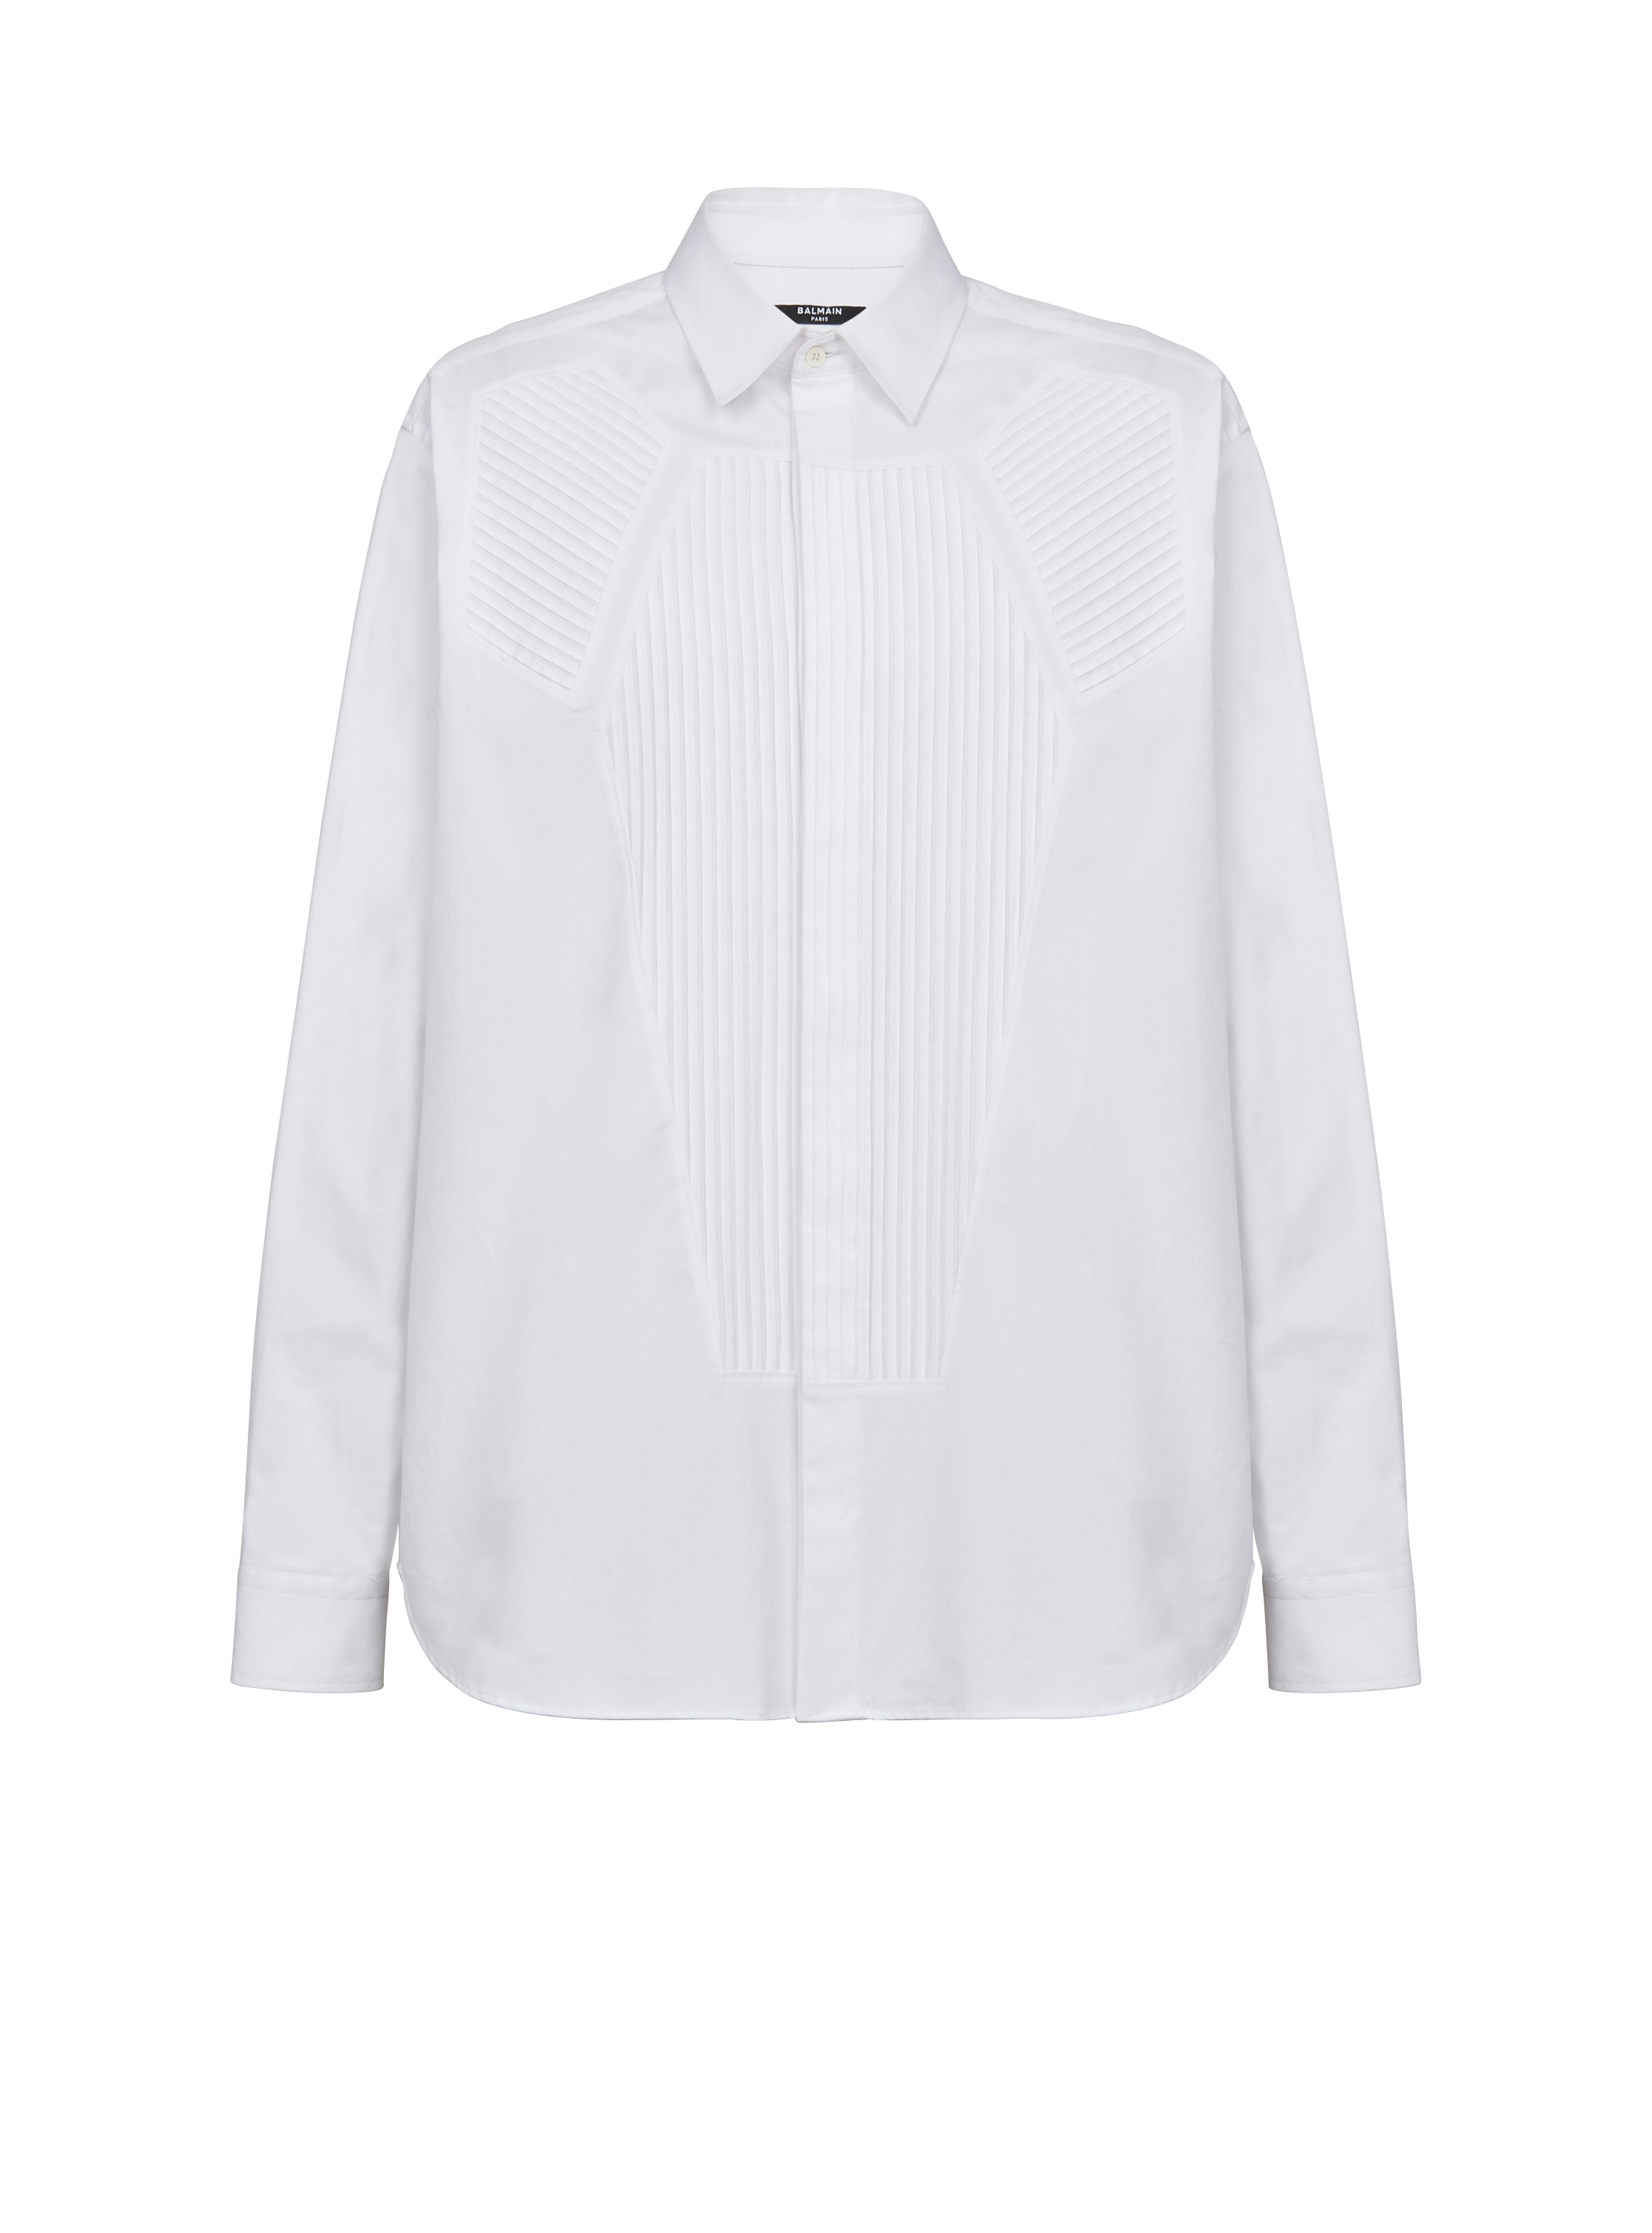 Balmain Pierre Balmain Shirt Sz 16 1/2 35 Mens Long Sleeve Tan White Striped Dress Shirt 